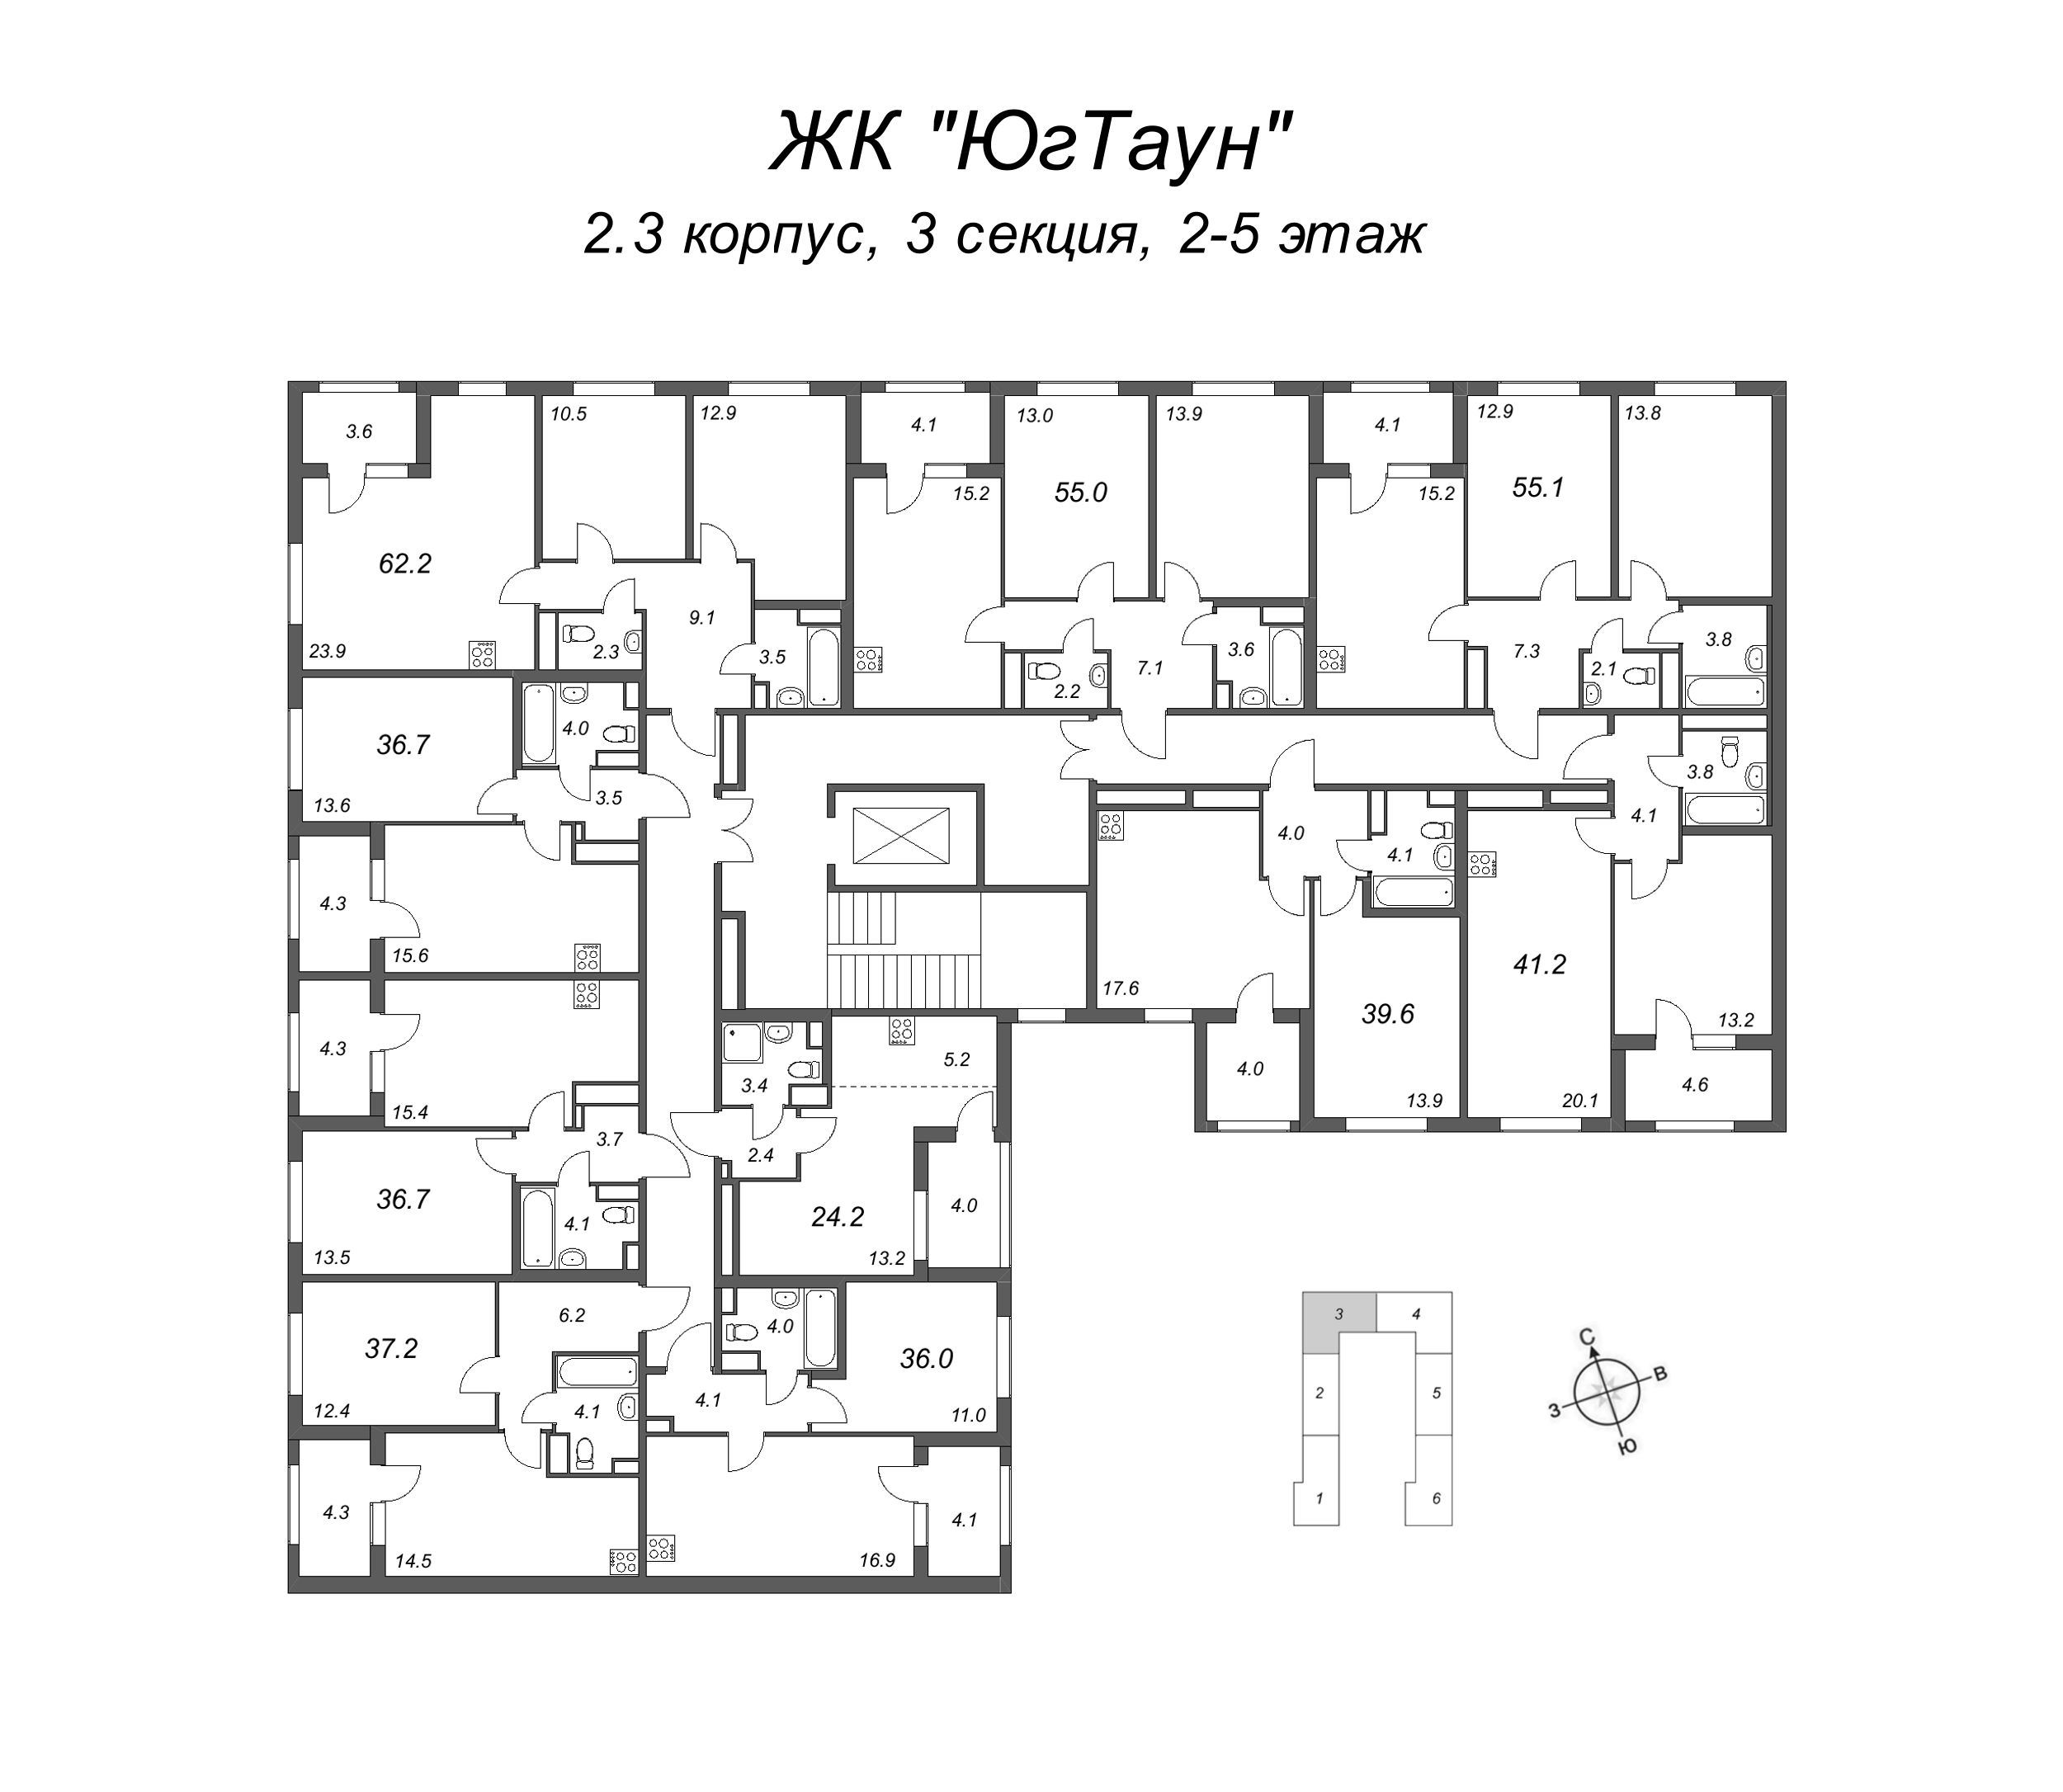 2-комнатная (Евро) квартира, 36 м² - планировка этажа